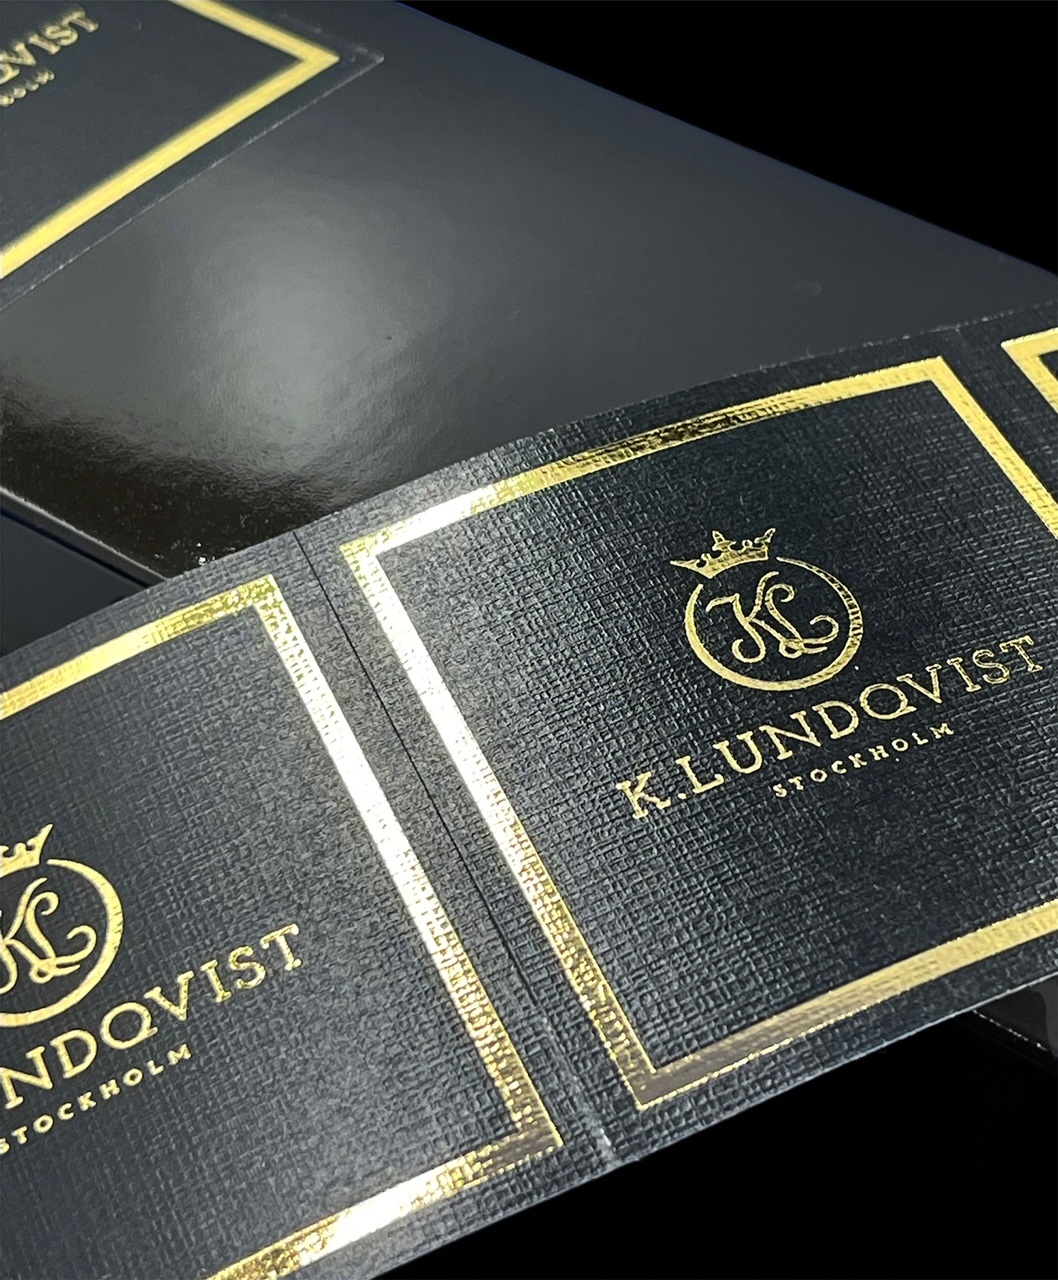 K. Lundqvist Doftpinnar - Tweed - 100 ml